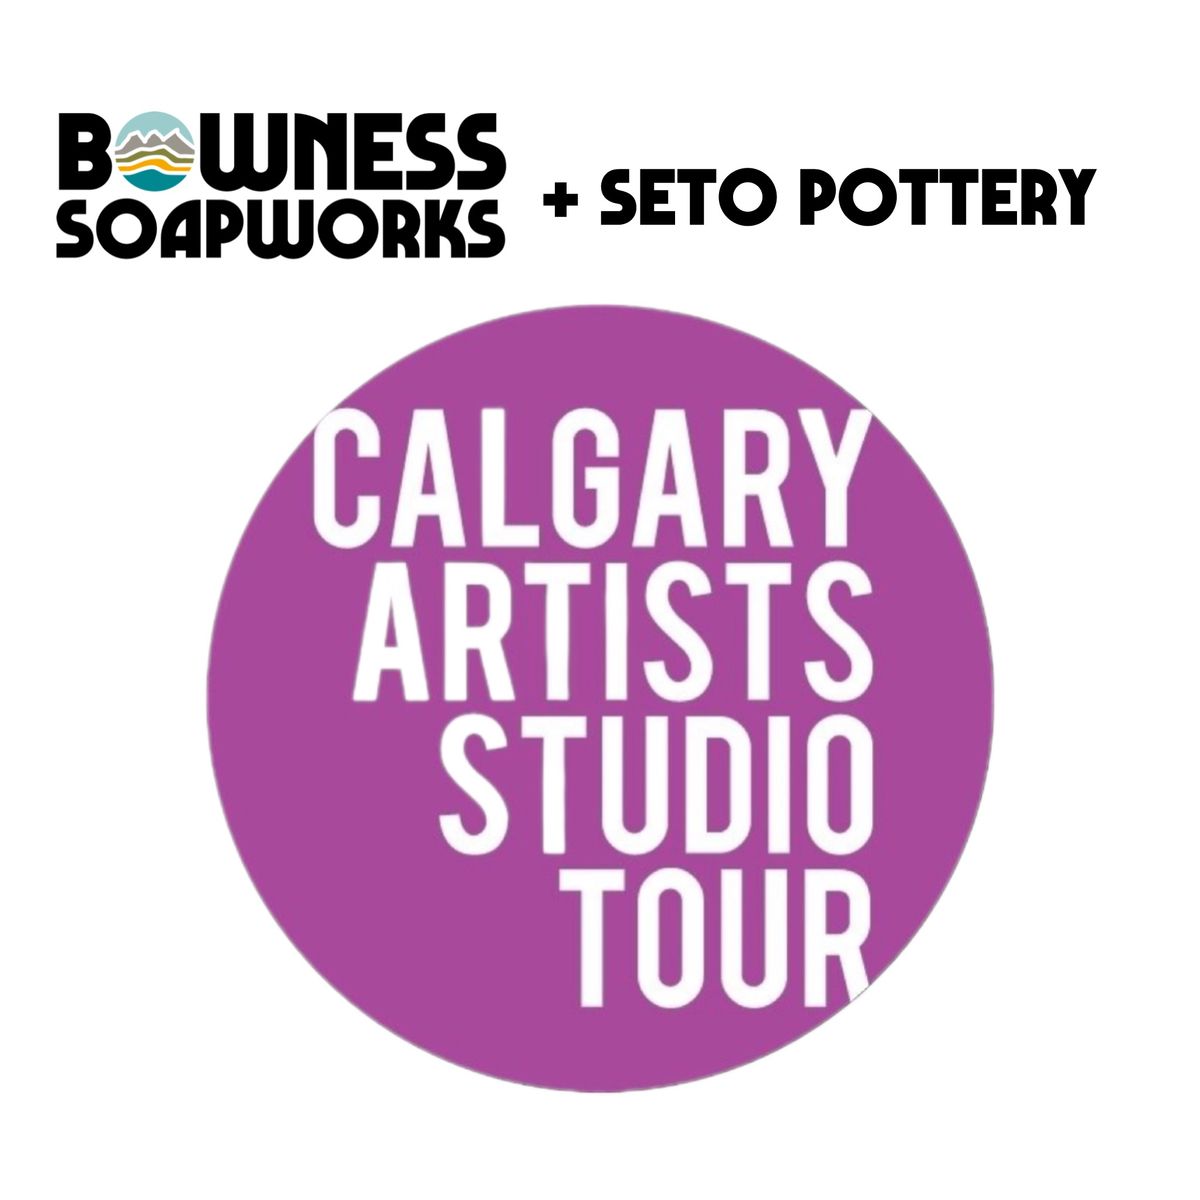 Calgary Artist Studio Tour (May 3-5) 